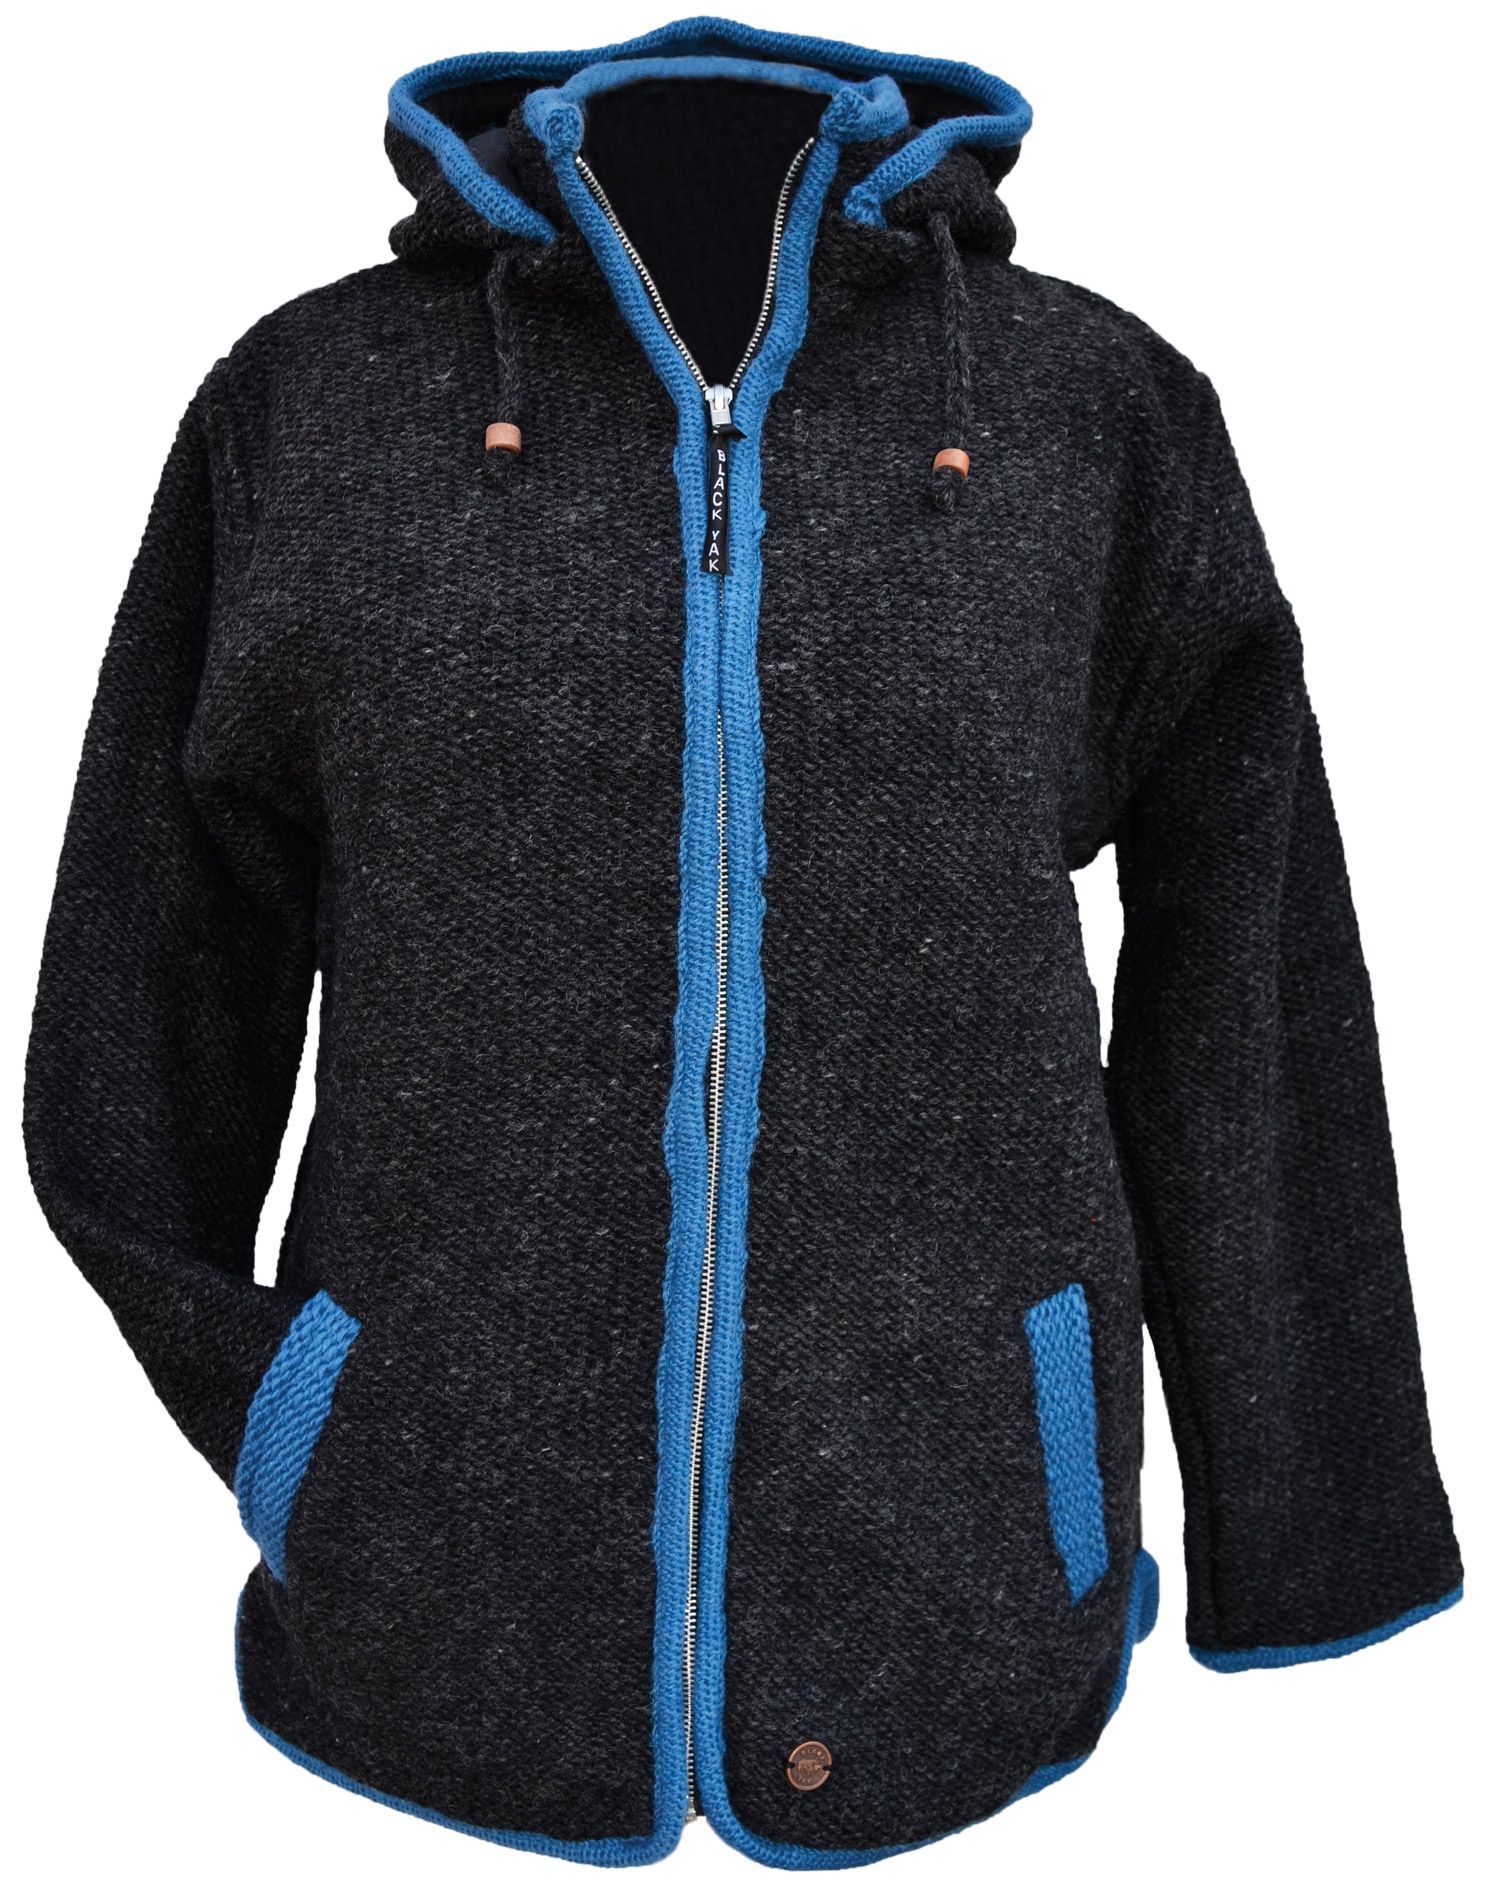 Pure wool - detachable hood - contrast trim - charcoal/blue | Black Yak